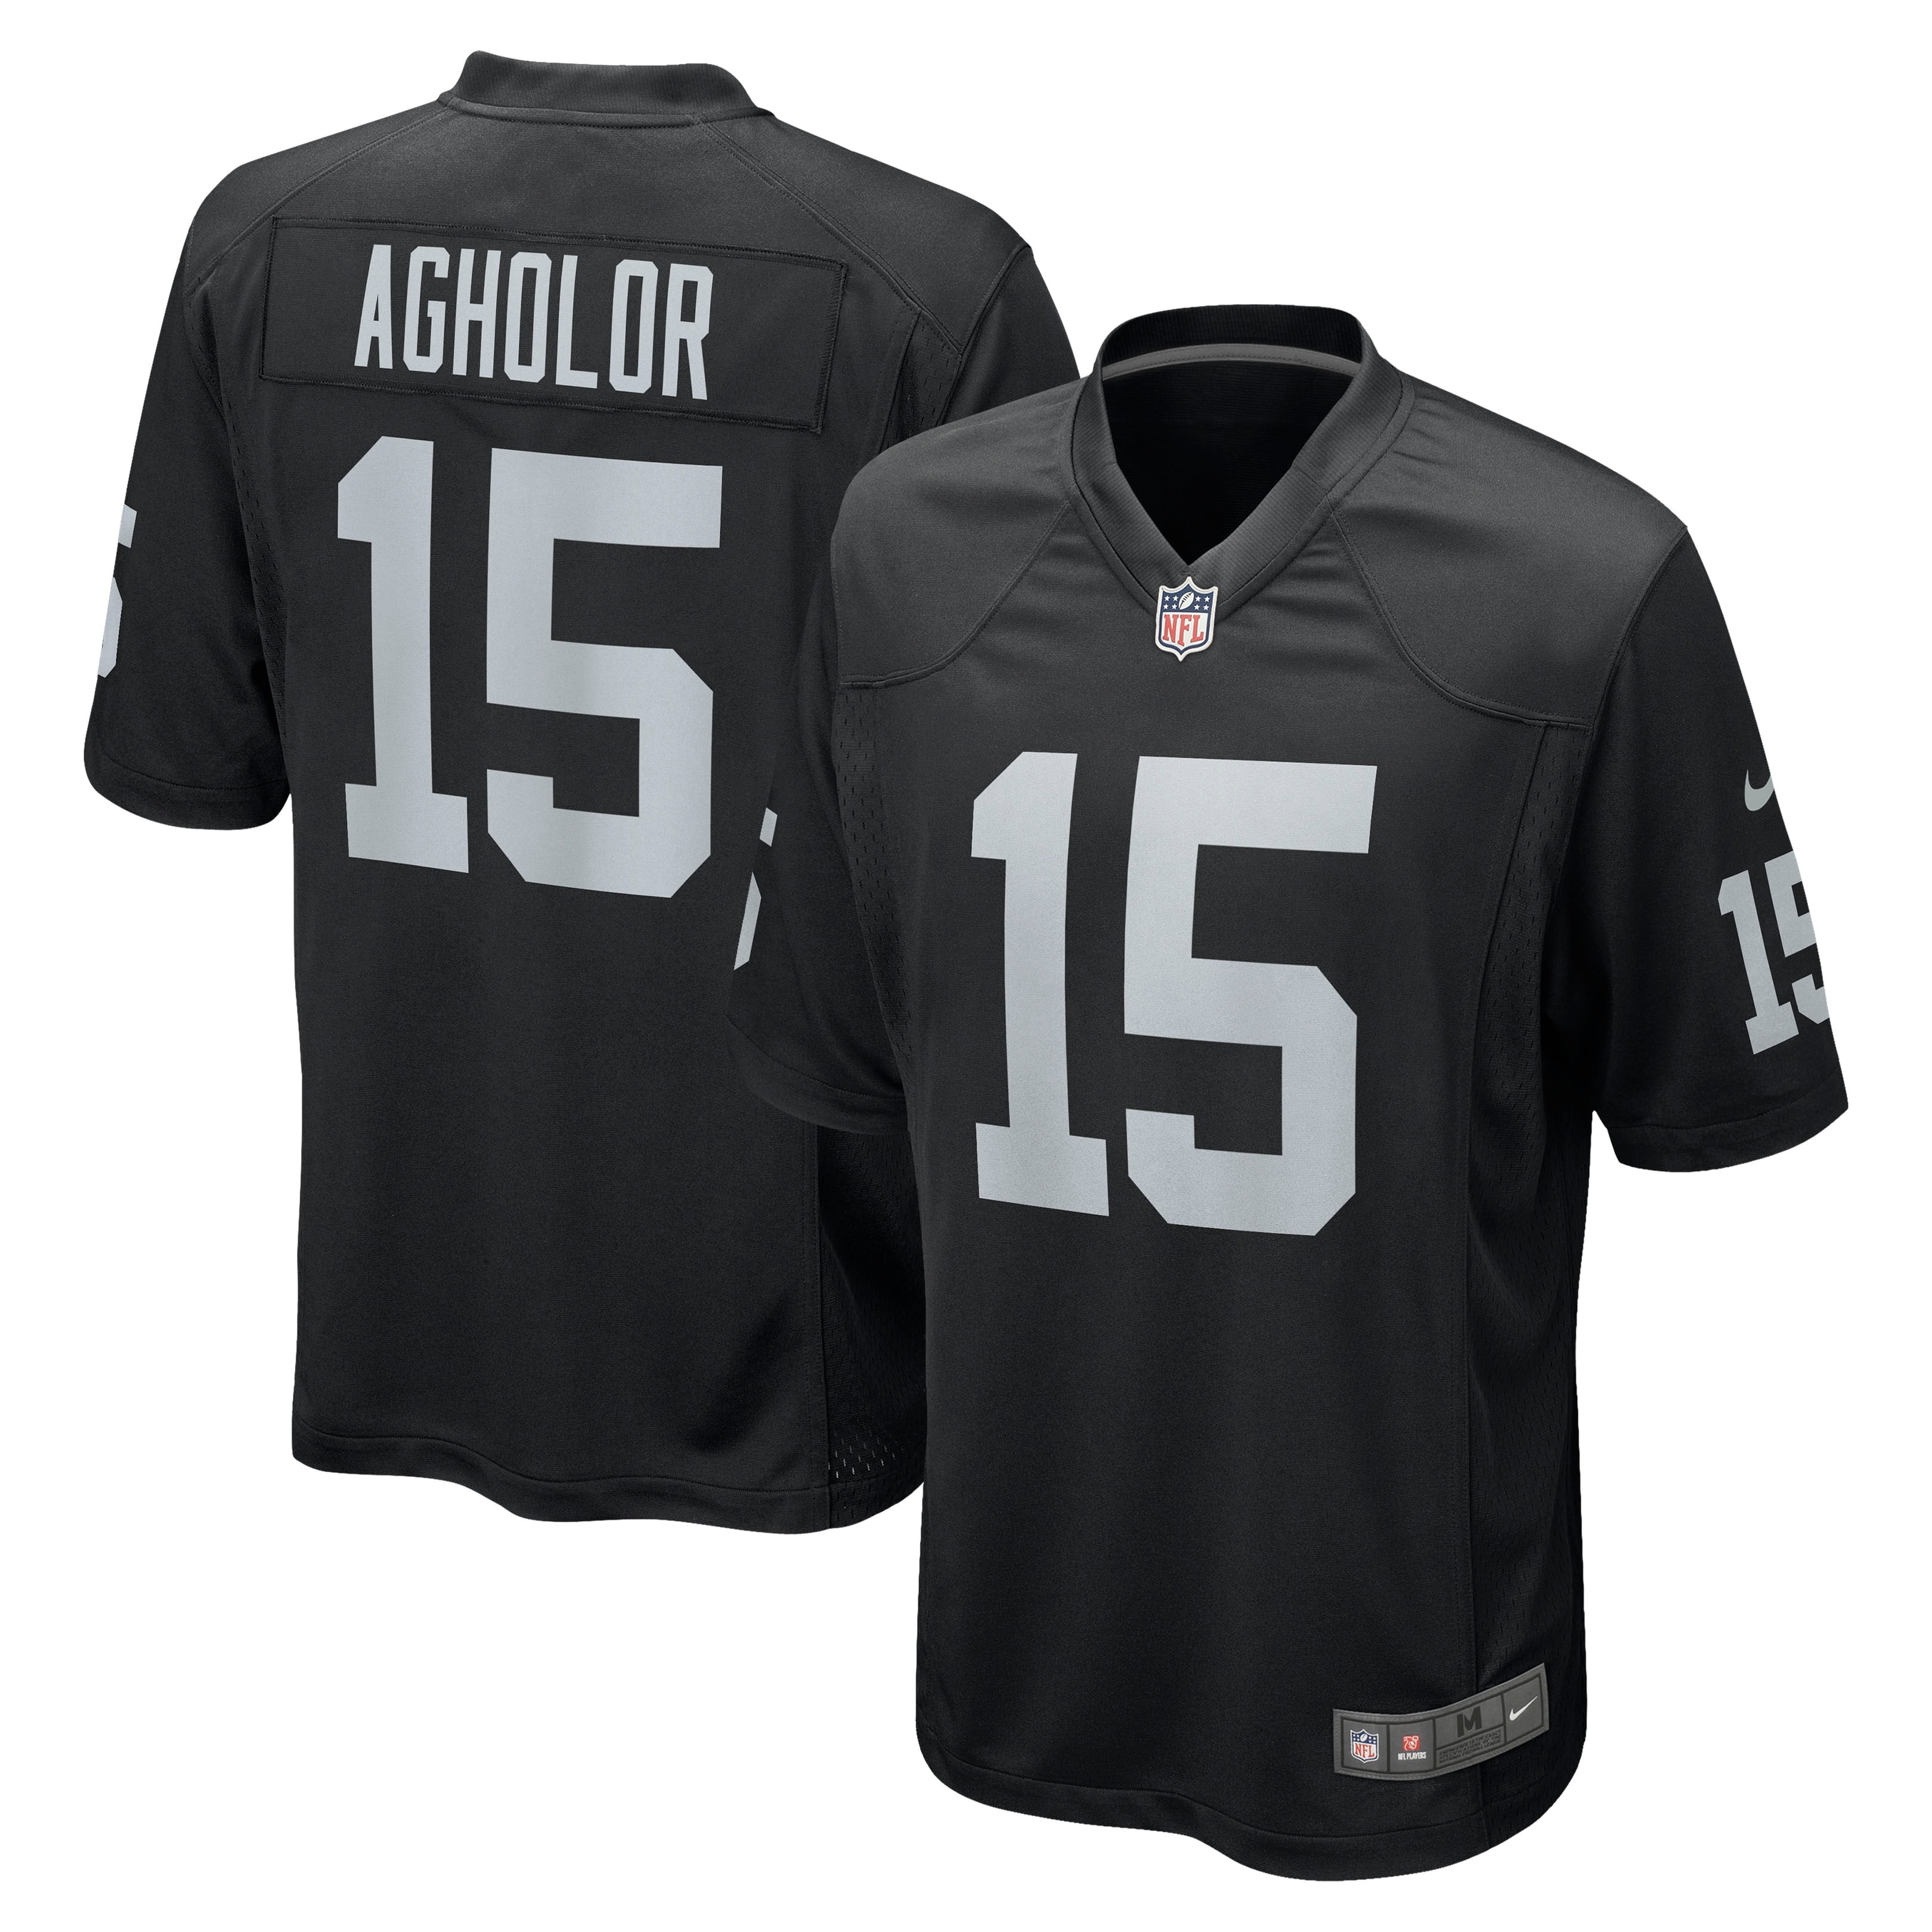 Nelson Agholor Las Vegas Raiders Nike Game Jersey - Black - Walmart.com